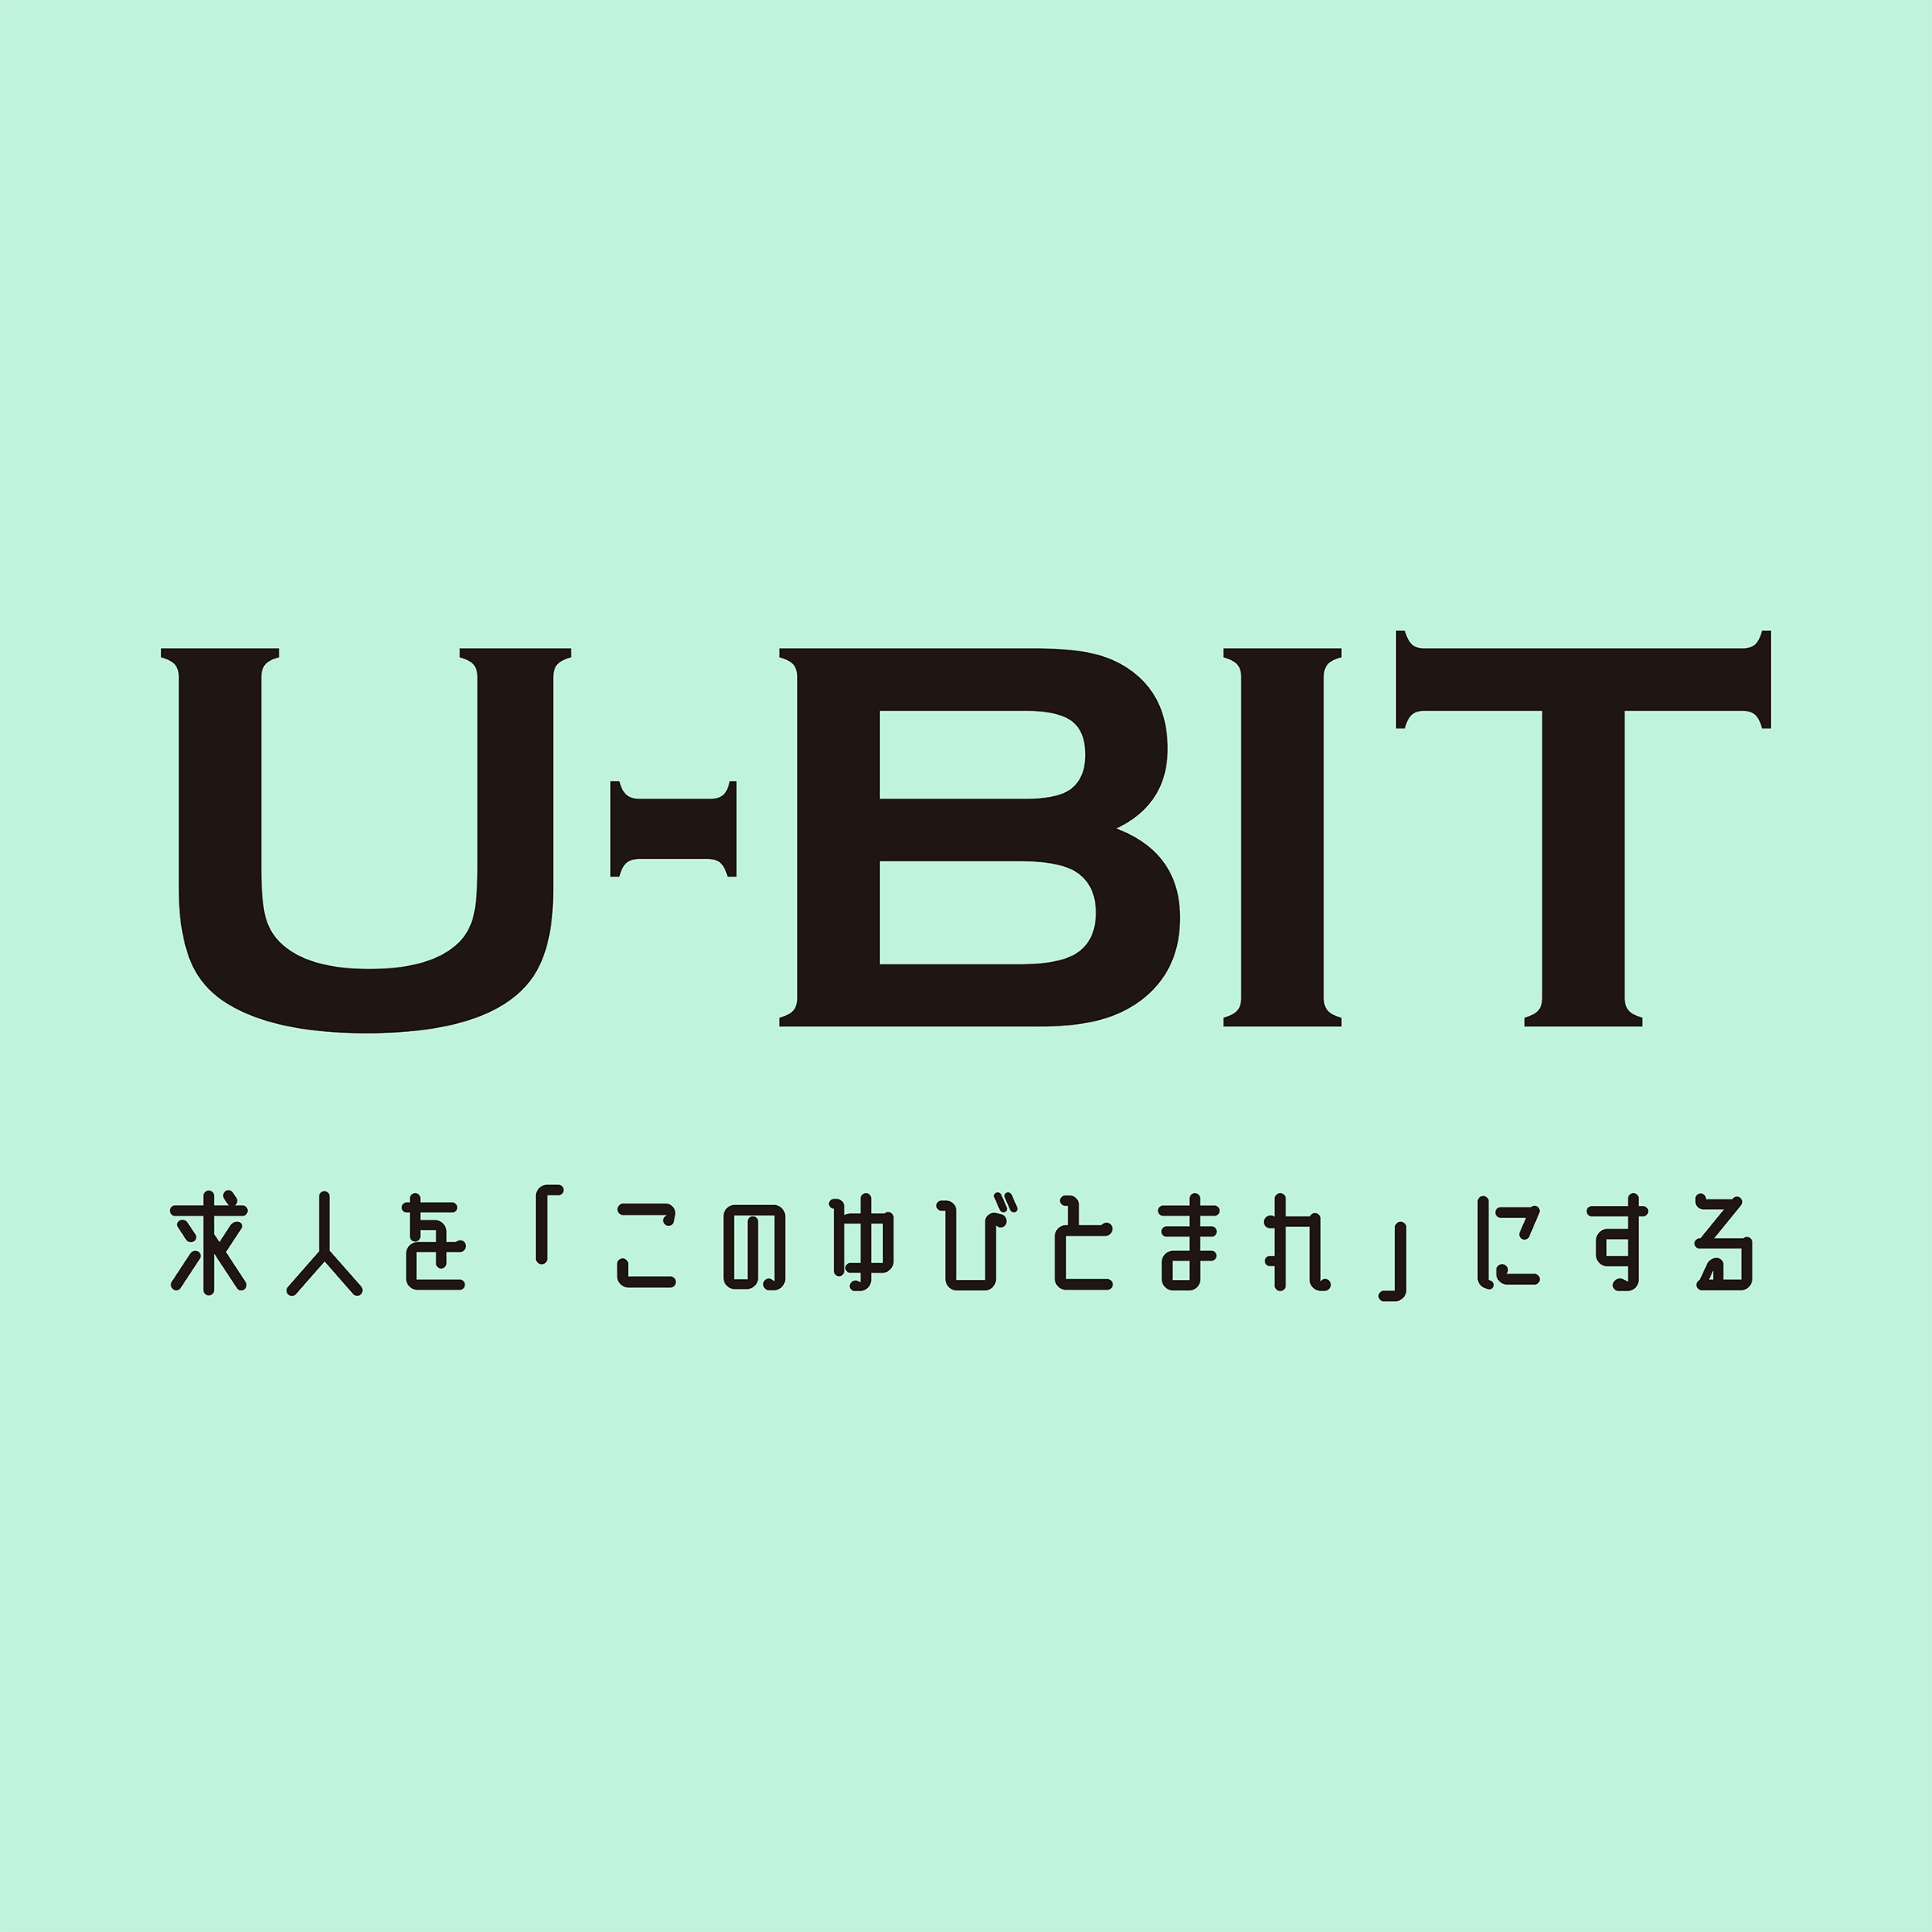 U-BIT_Presentation-.png